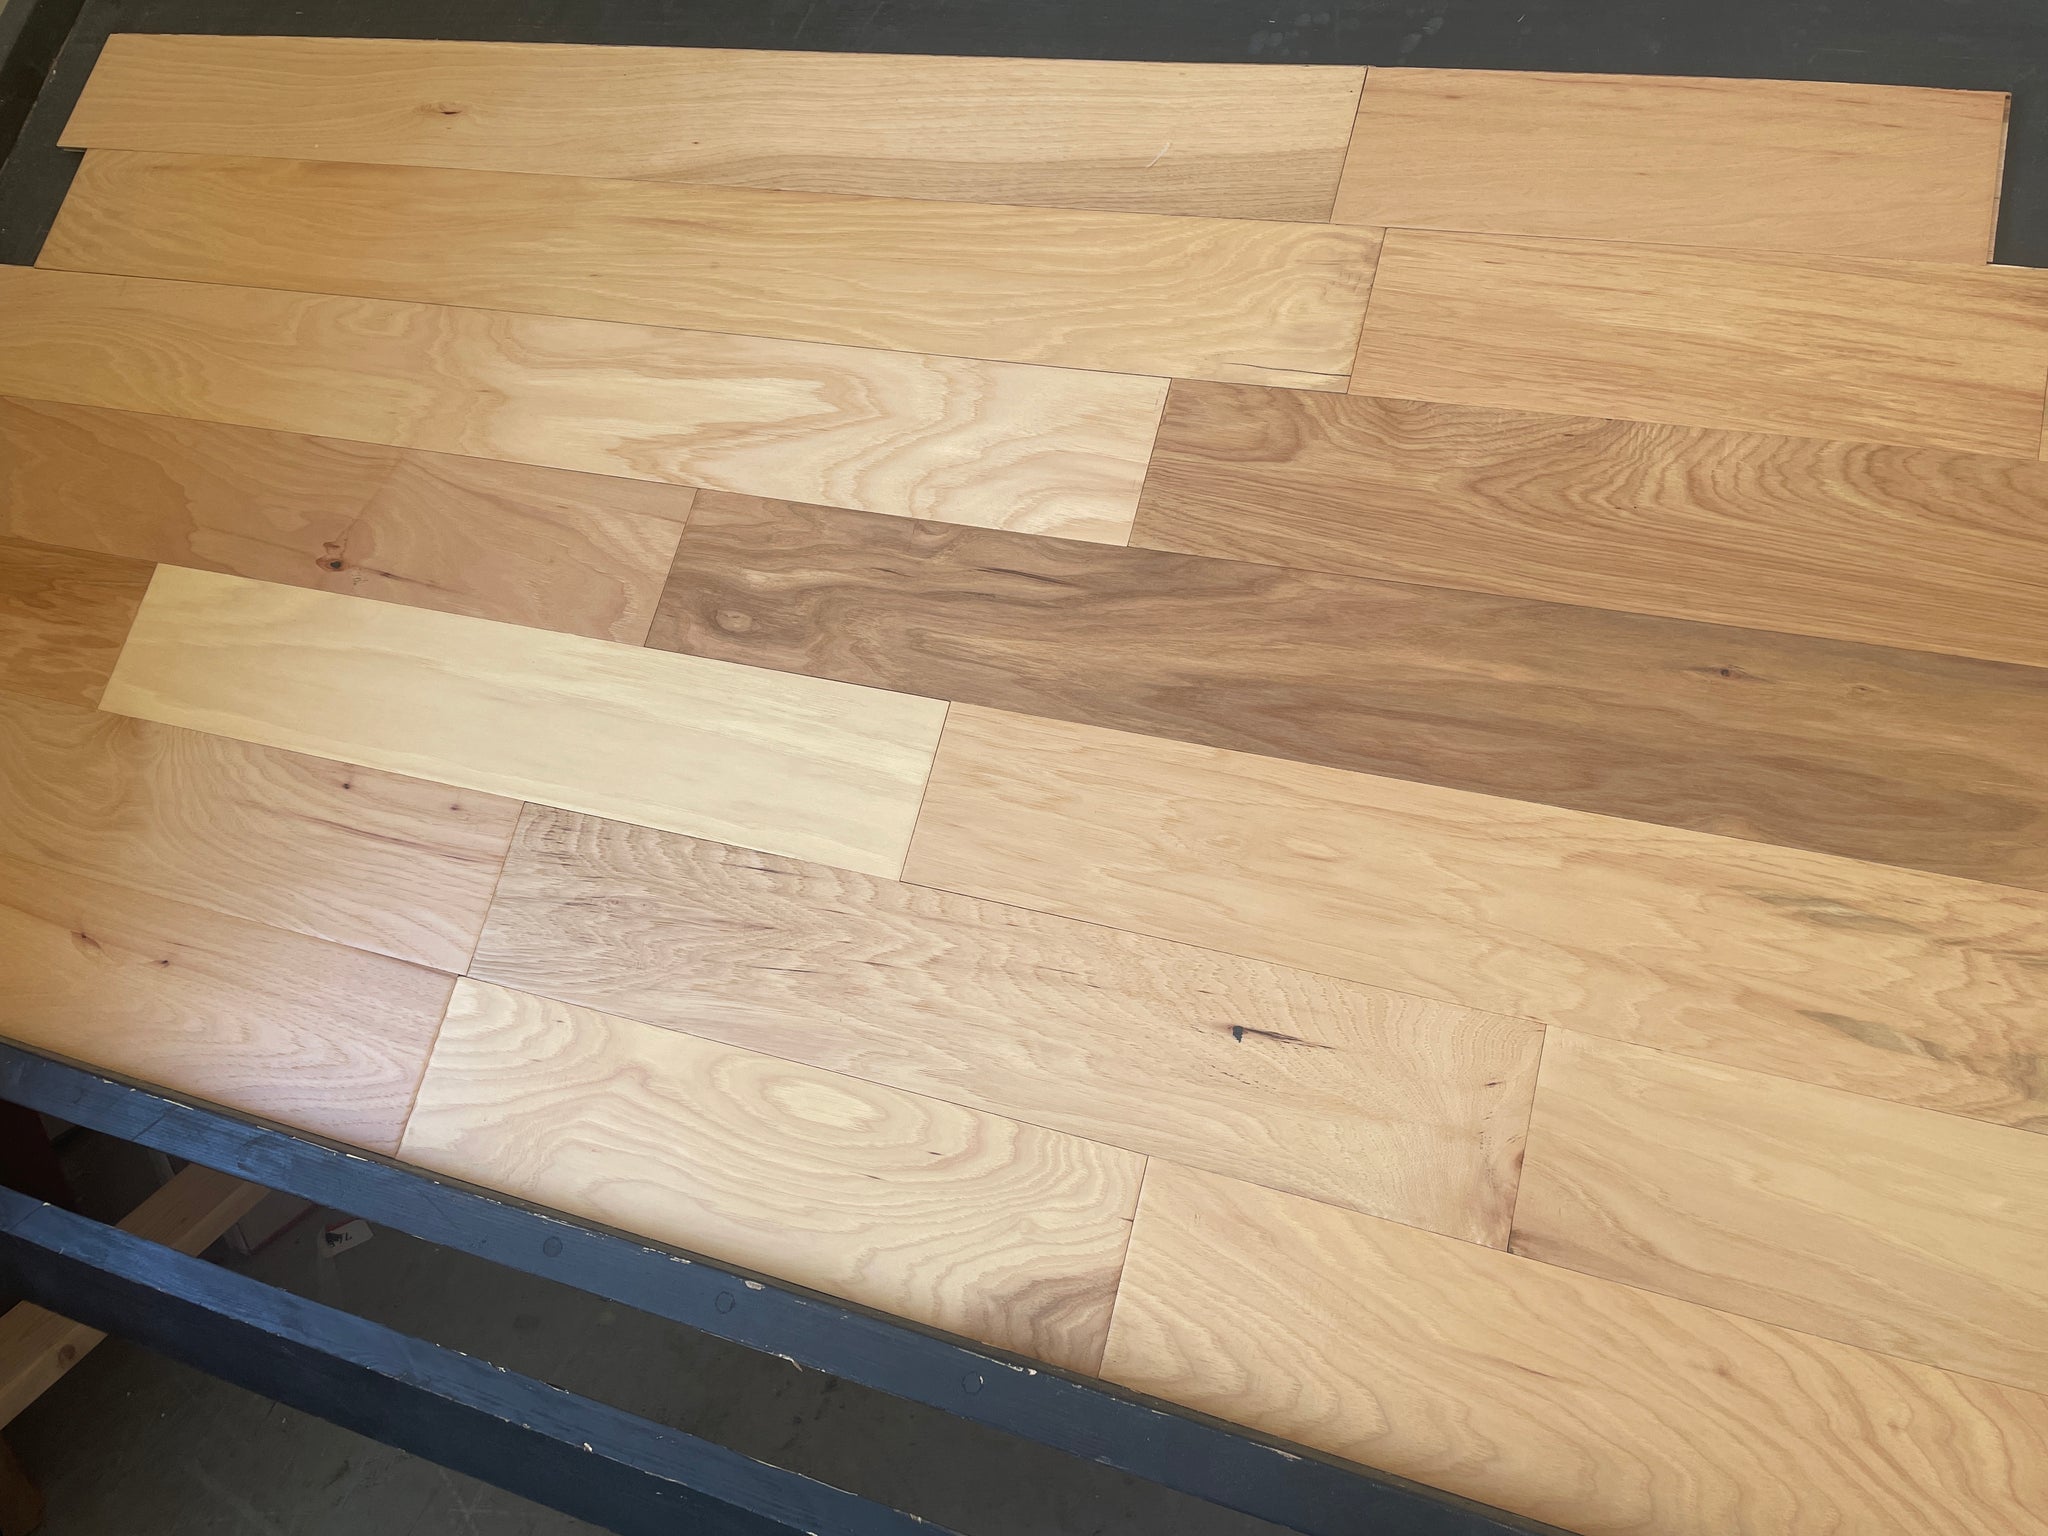 hickory hardwood flooring options